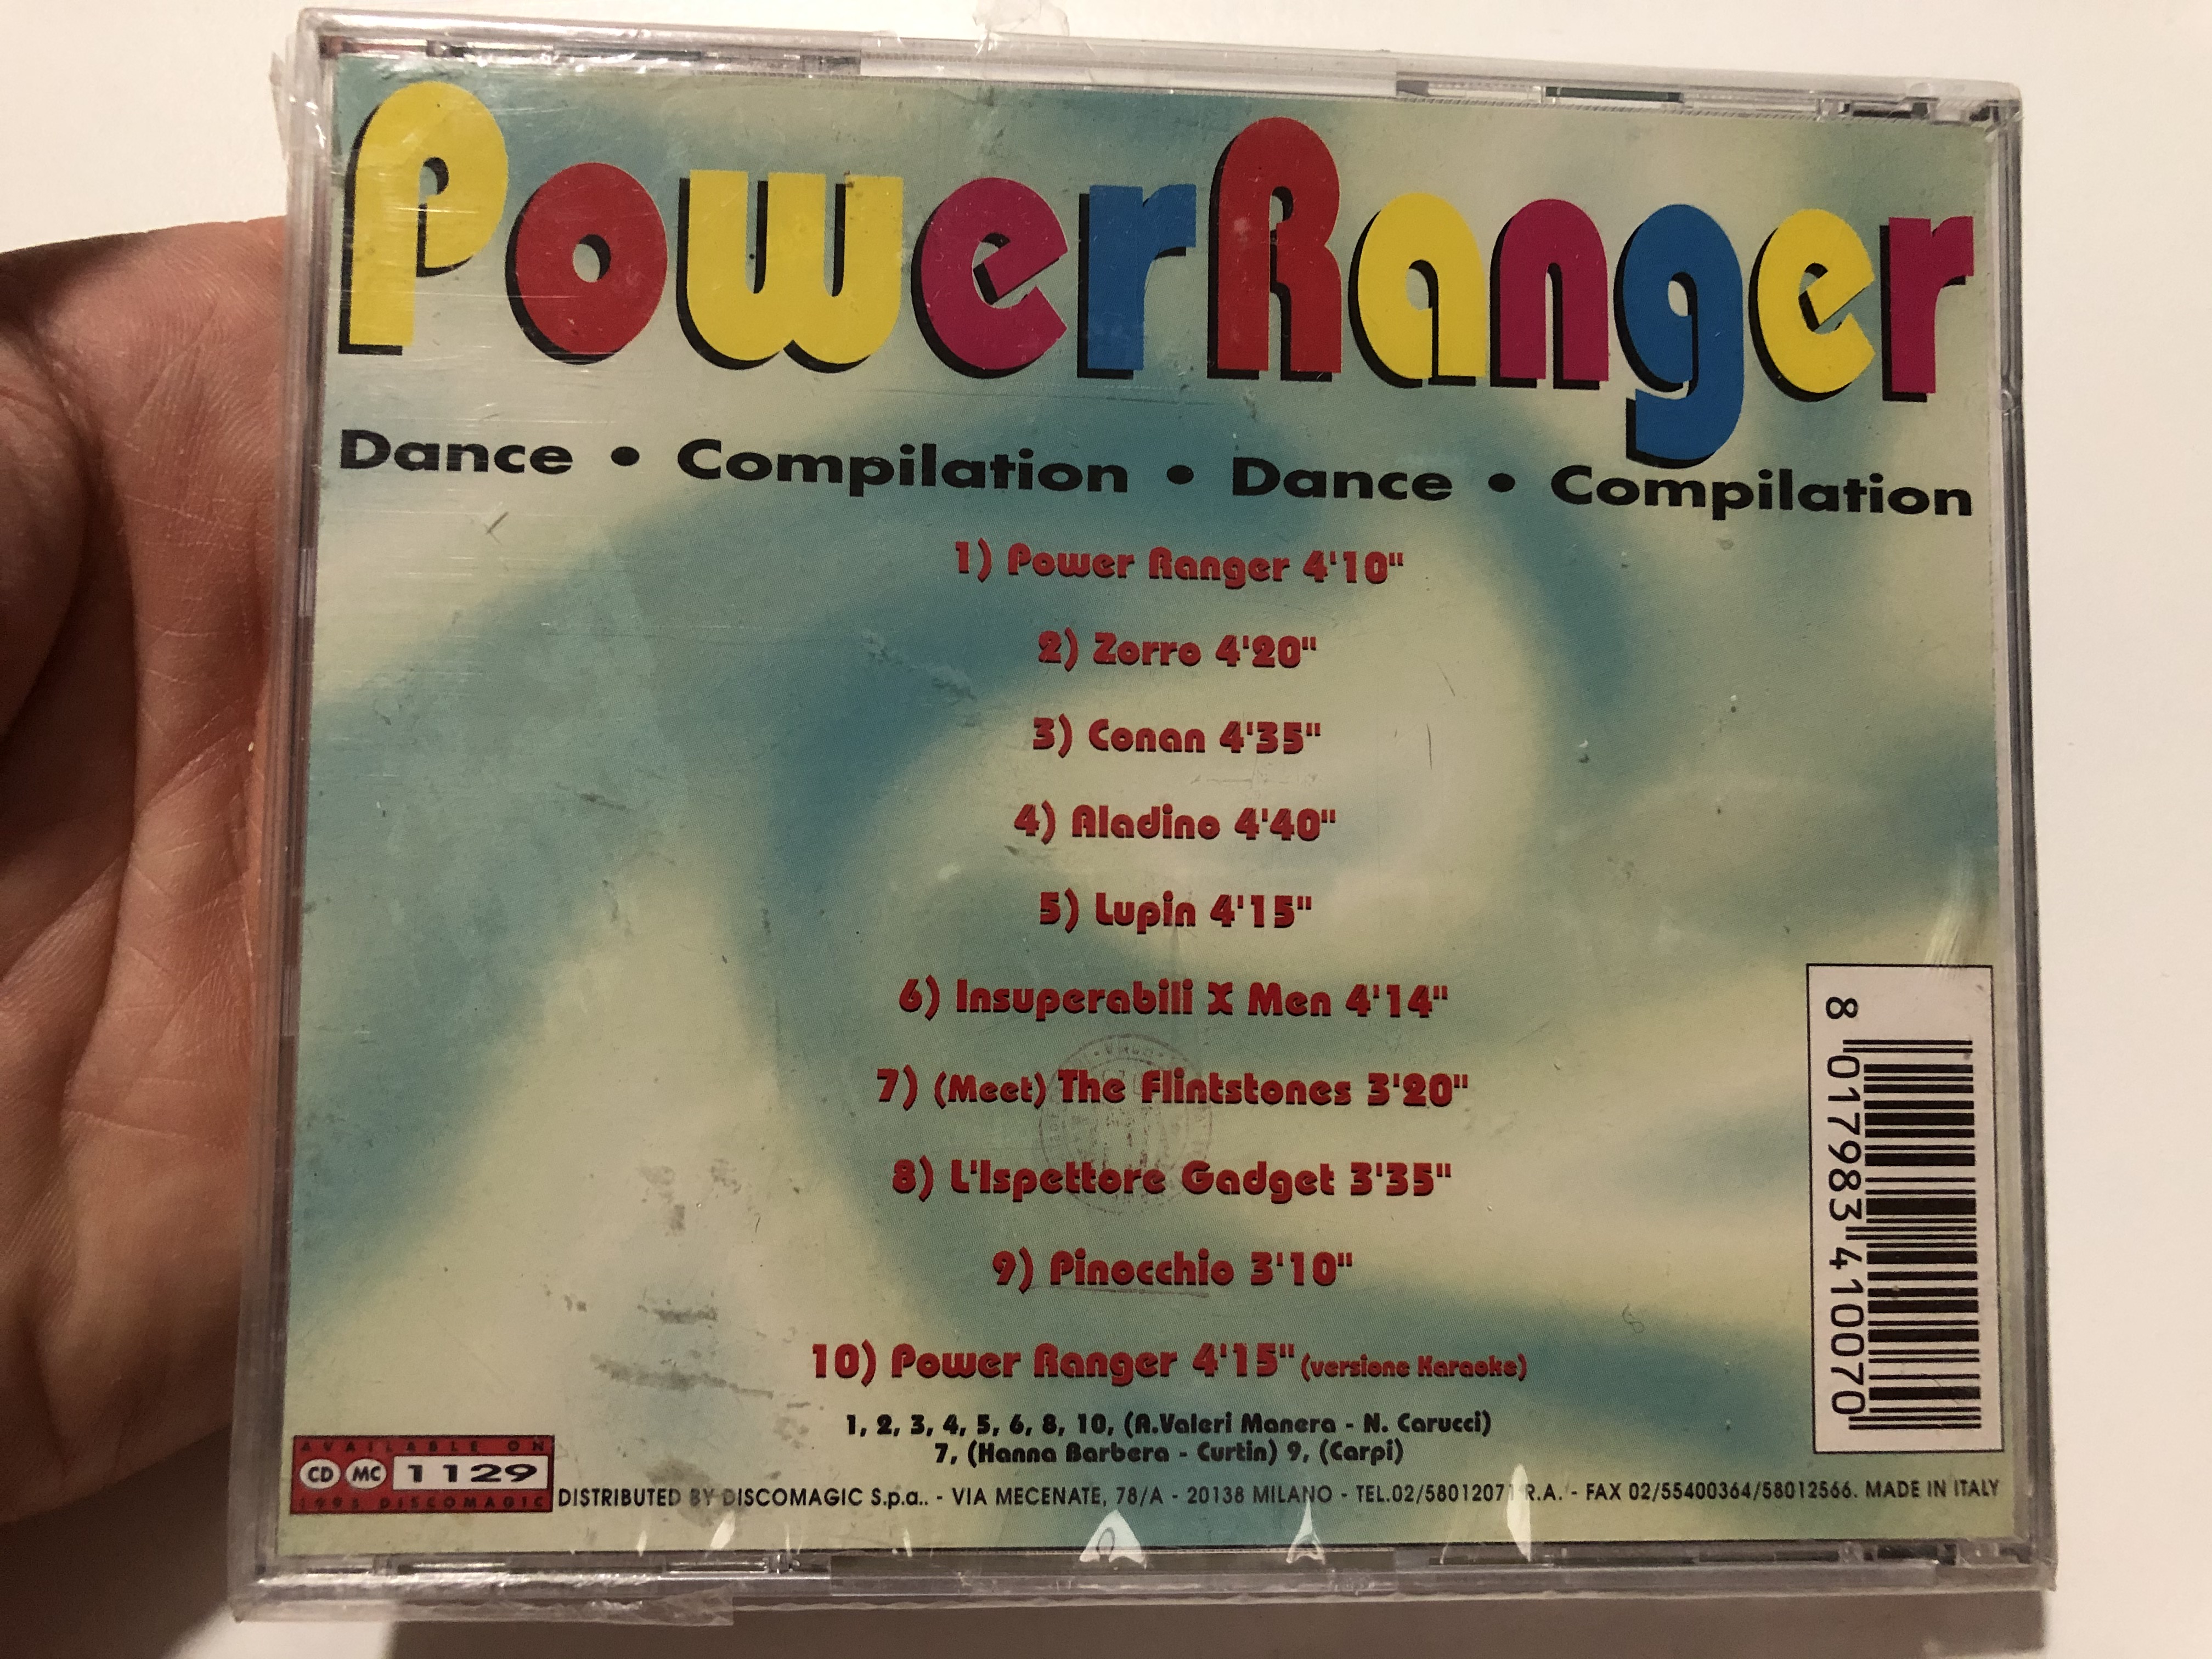 power-ranger-dance-compilation-l-ispettore-gadget-lupin-pinocchio-power-ranger-versione-karaoke-zorro-aladino-conan-insuperabili-x-men-discomagic-records-audio-cd-cd1129-2-.jpg